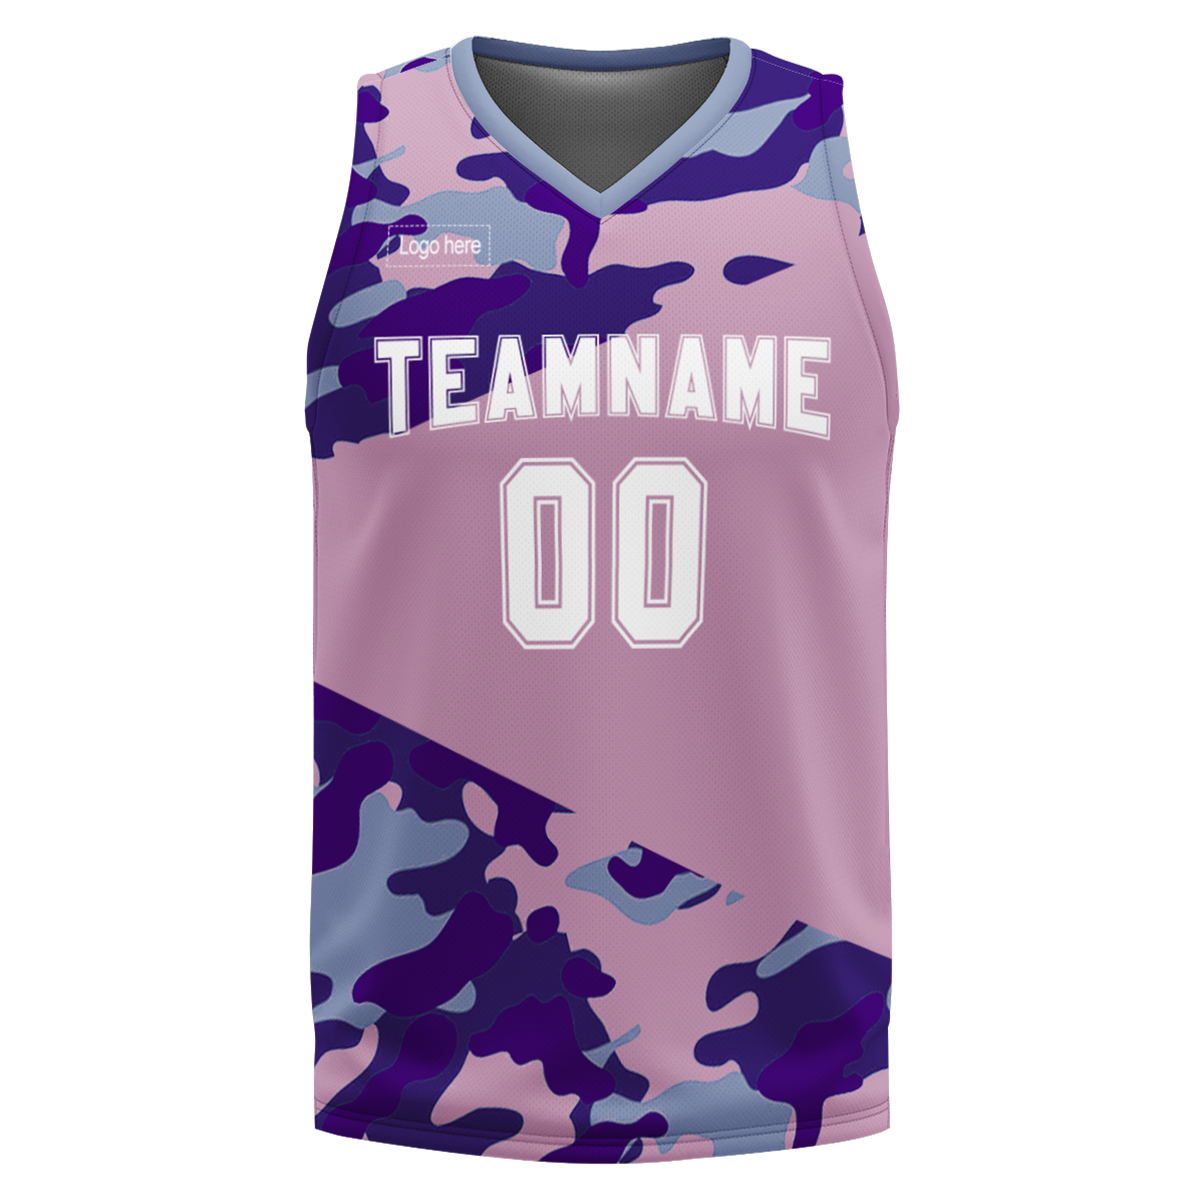 factory-maker-oem-team-name-sport-basketball-shirts-quick-dry-breathable-basketball-wear-uniform-jerseys-at-cj-pod-4